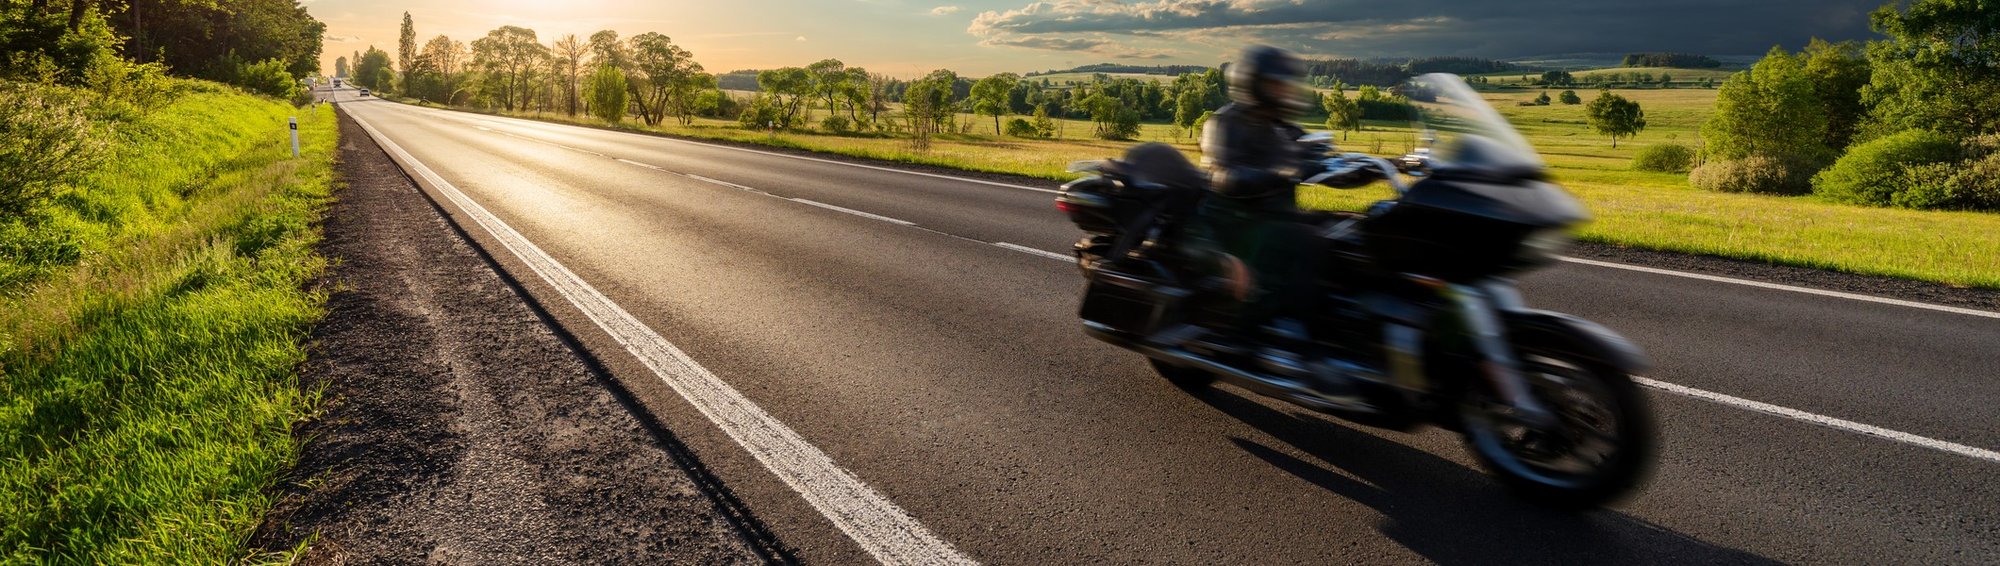 Motion blurred black motorcycle riding on an empty asphalt road in a rural landscape at sunset [1324281558]_banner-1